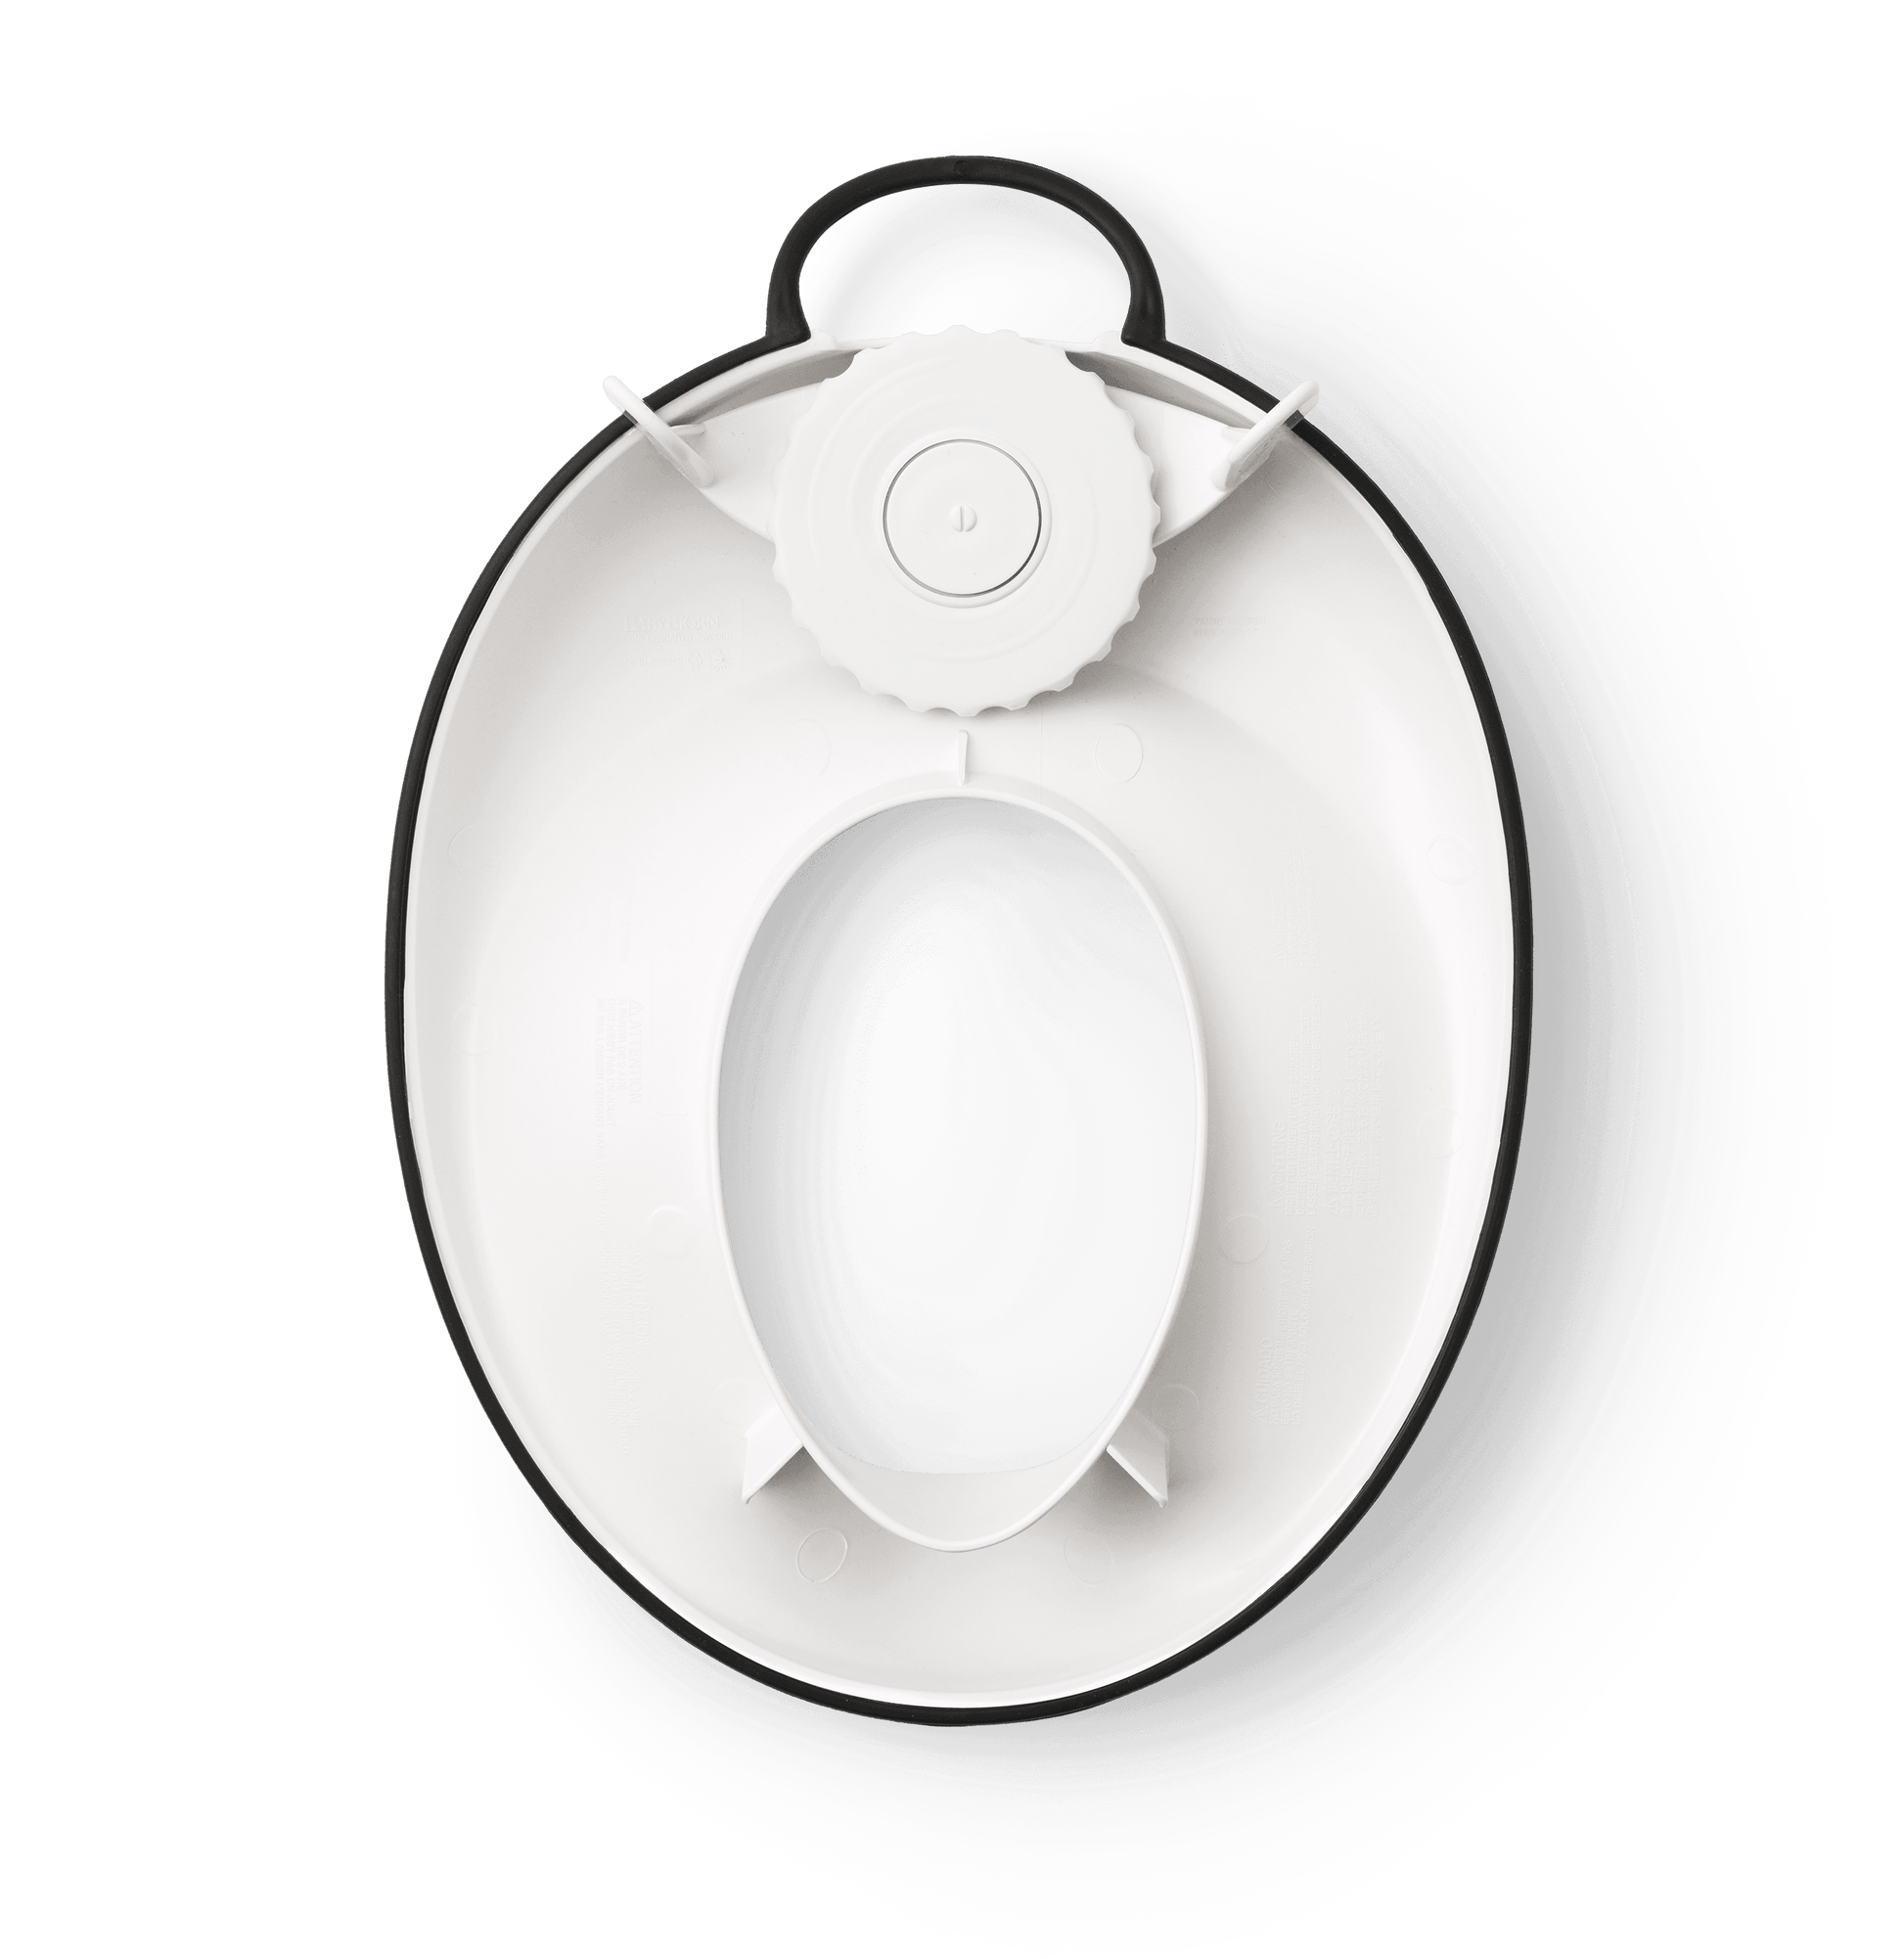 Baby Bjorn Toilet Training Seat - White/Turquiose - Traveling Tikes 